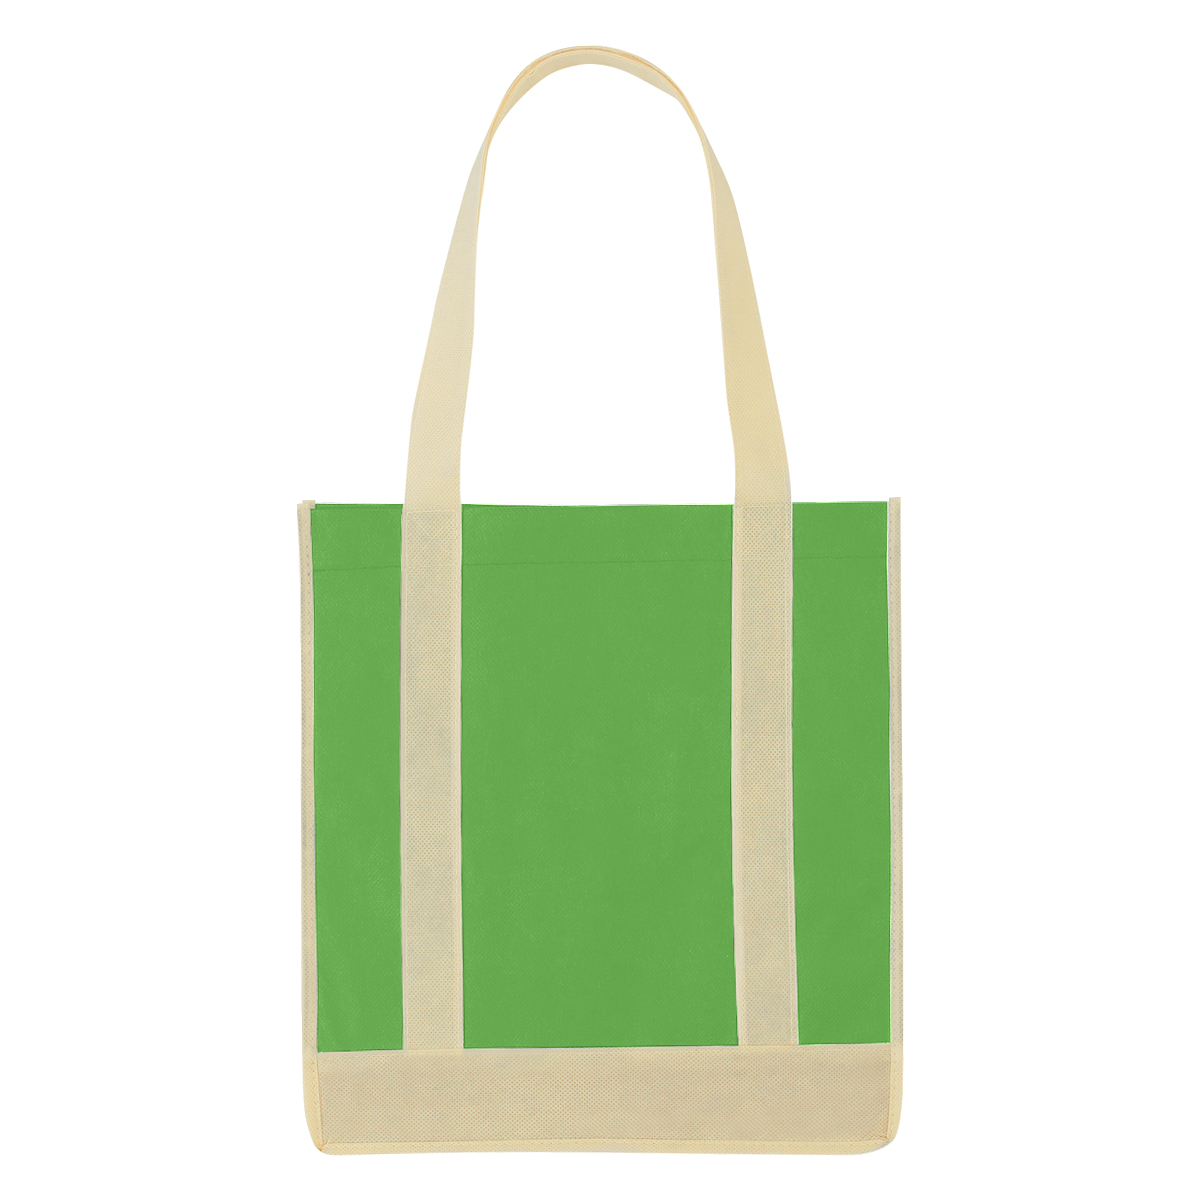 Two Tone Shopper Tote Bag - Primary Distributors LTD.